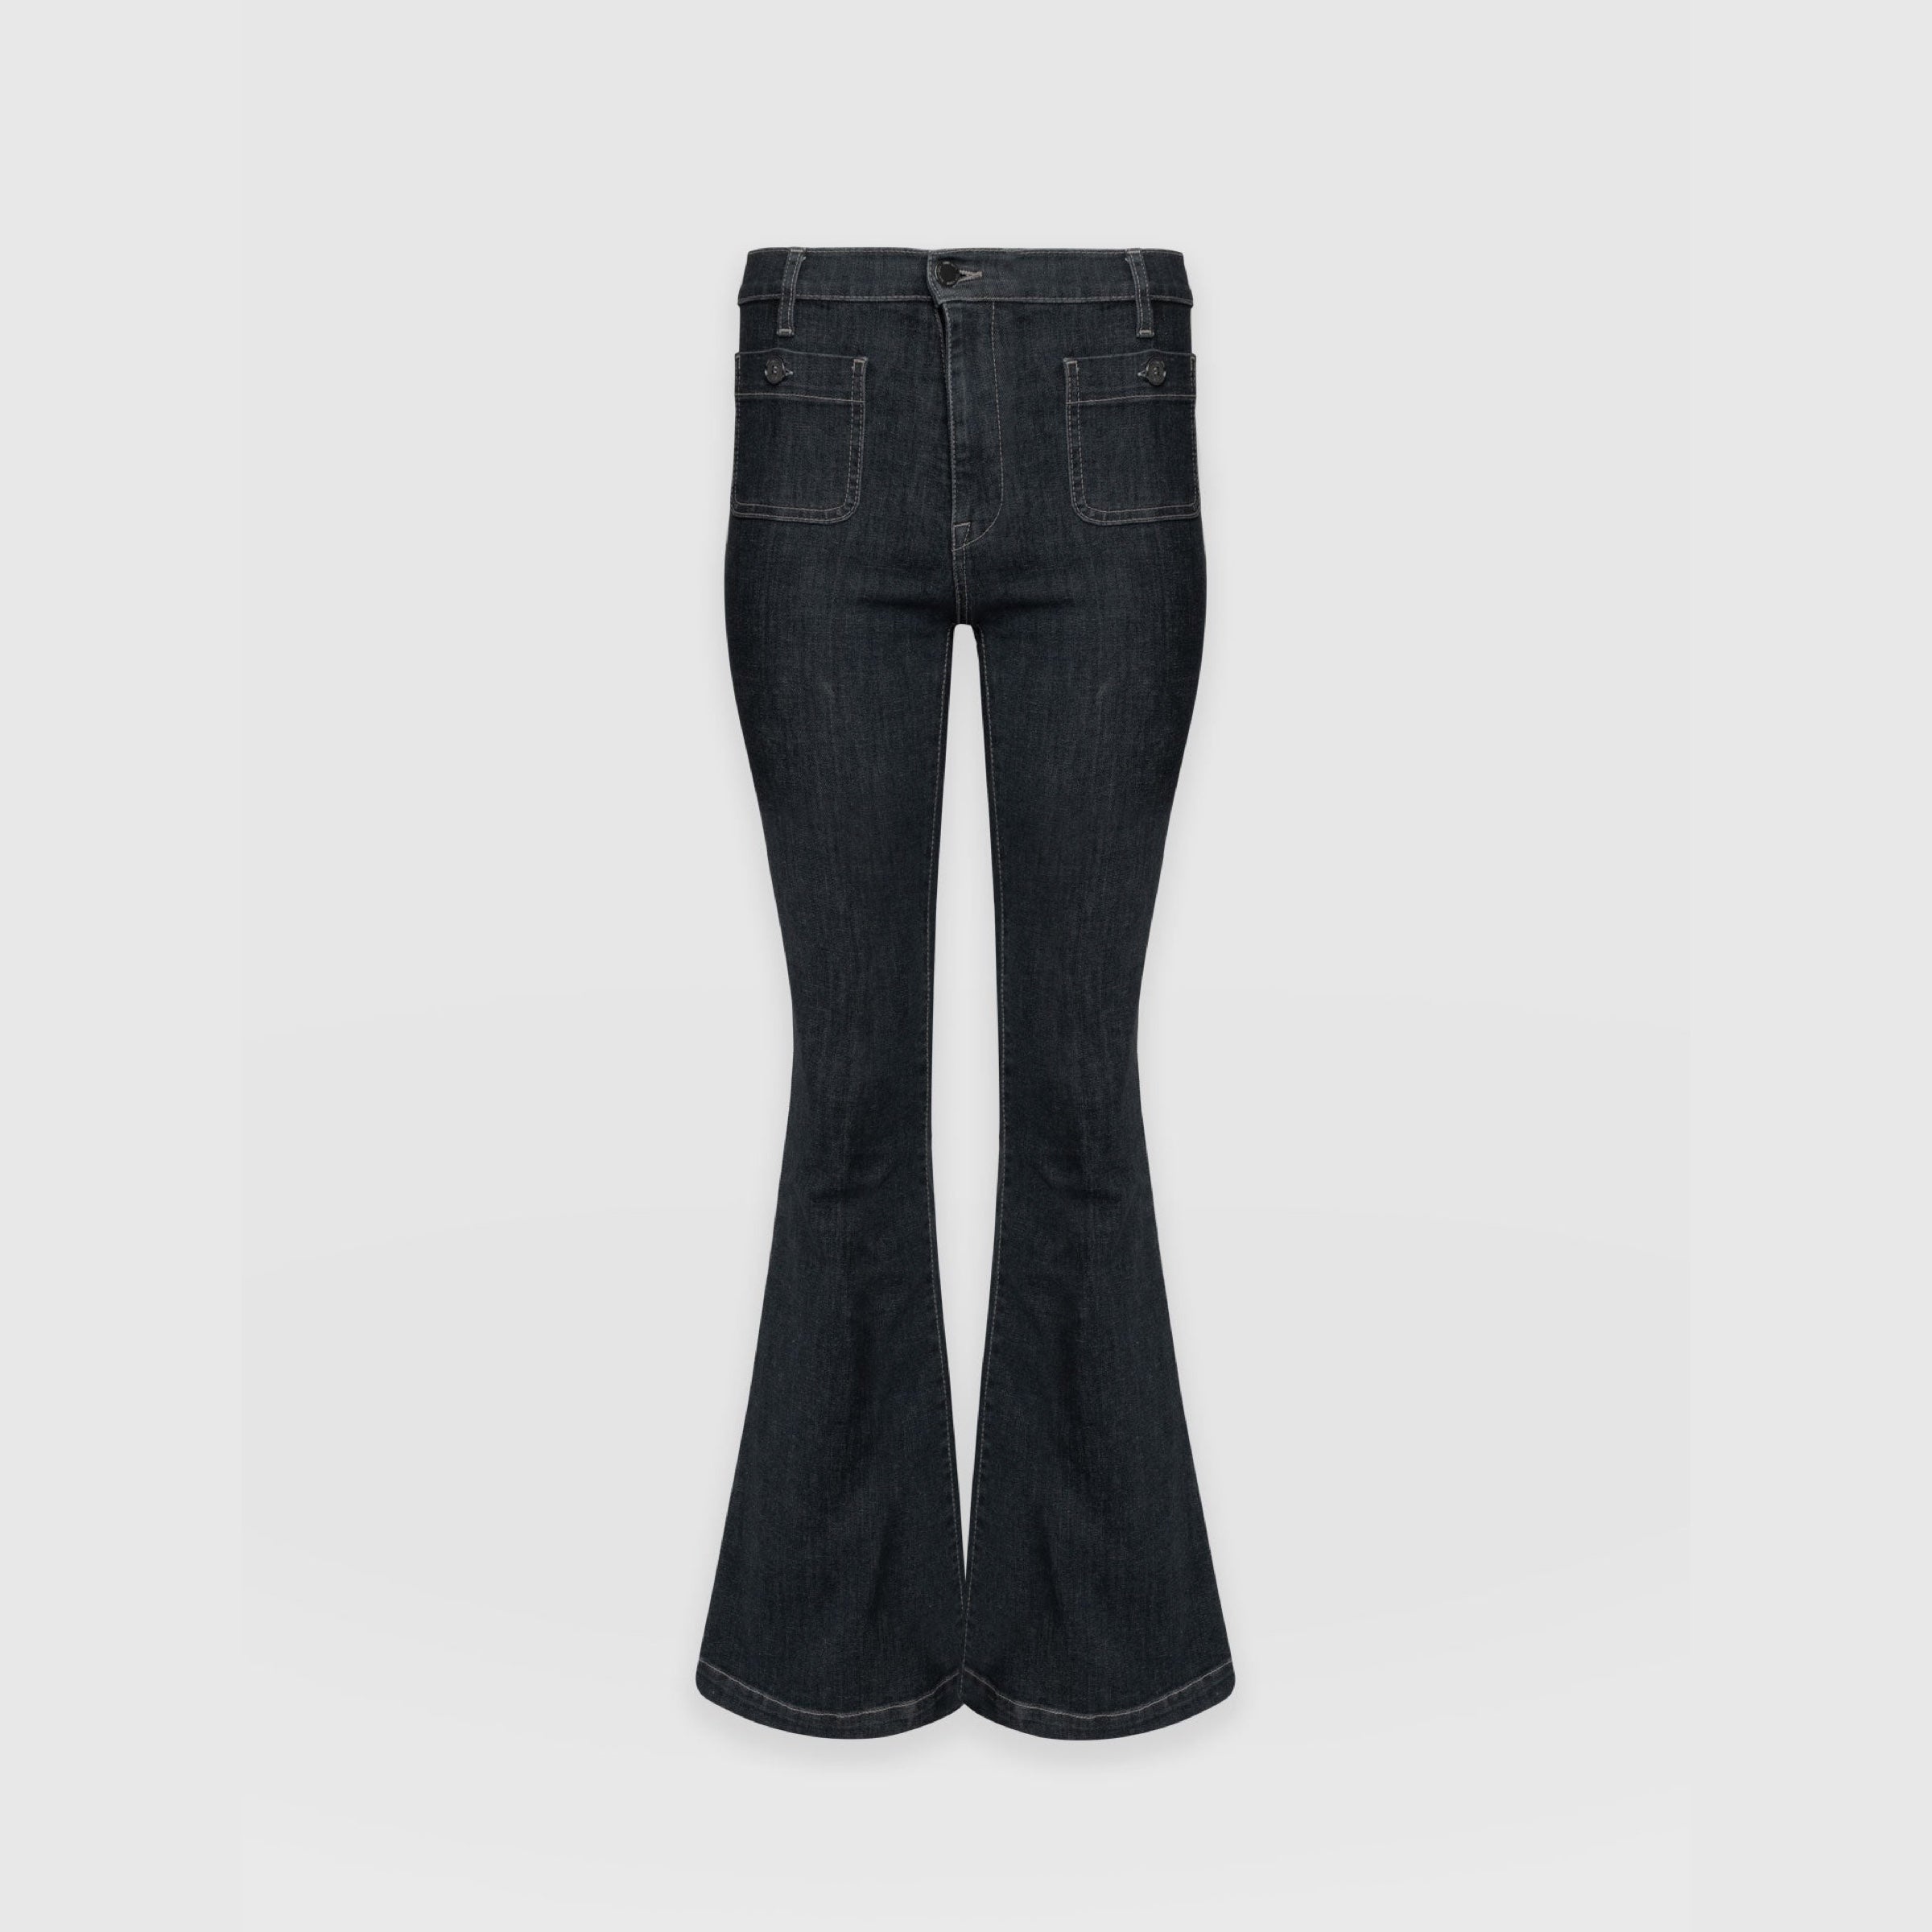 ASEIDFNSA Classic Denim Womens On Pants Tall Womens Jeans Casual